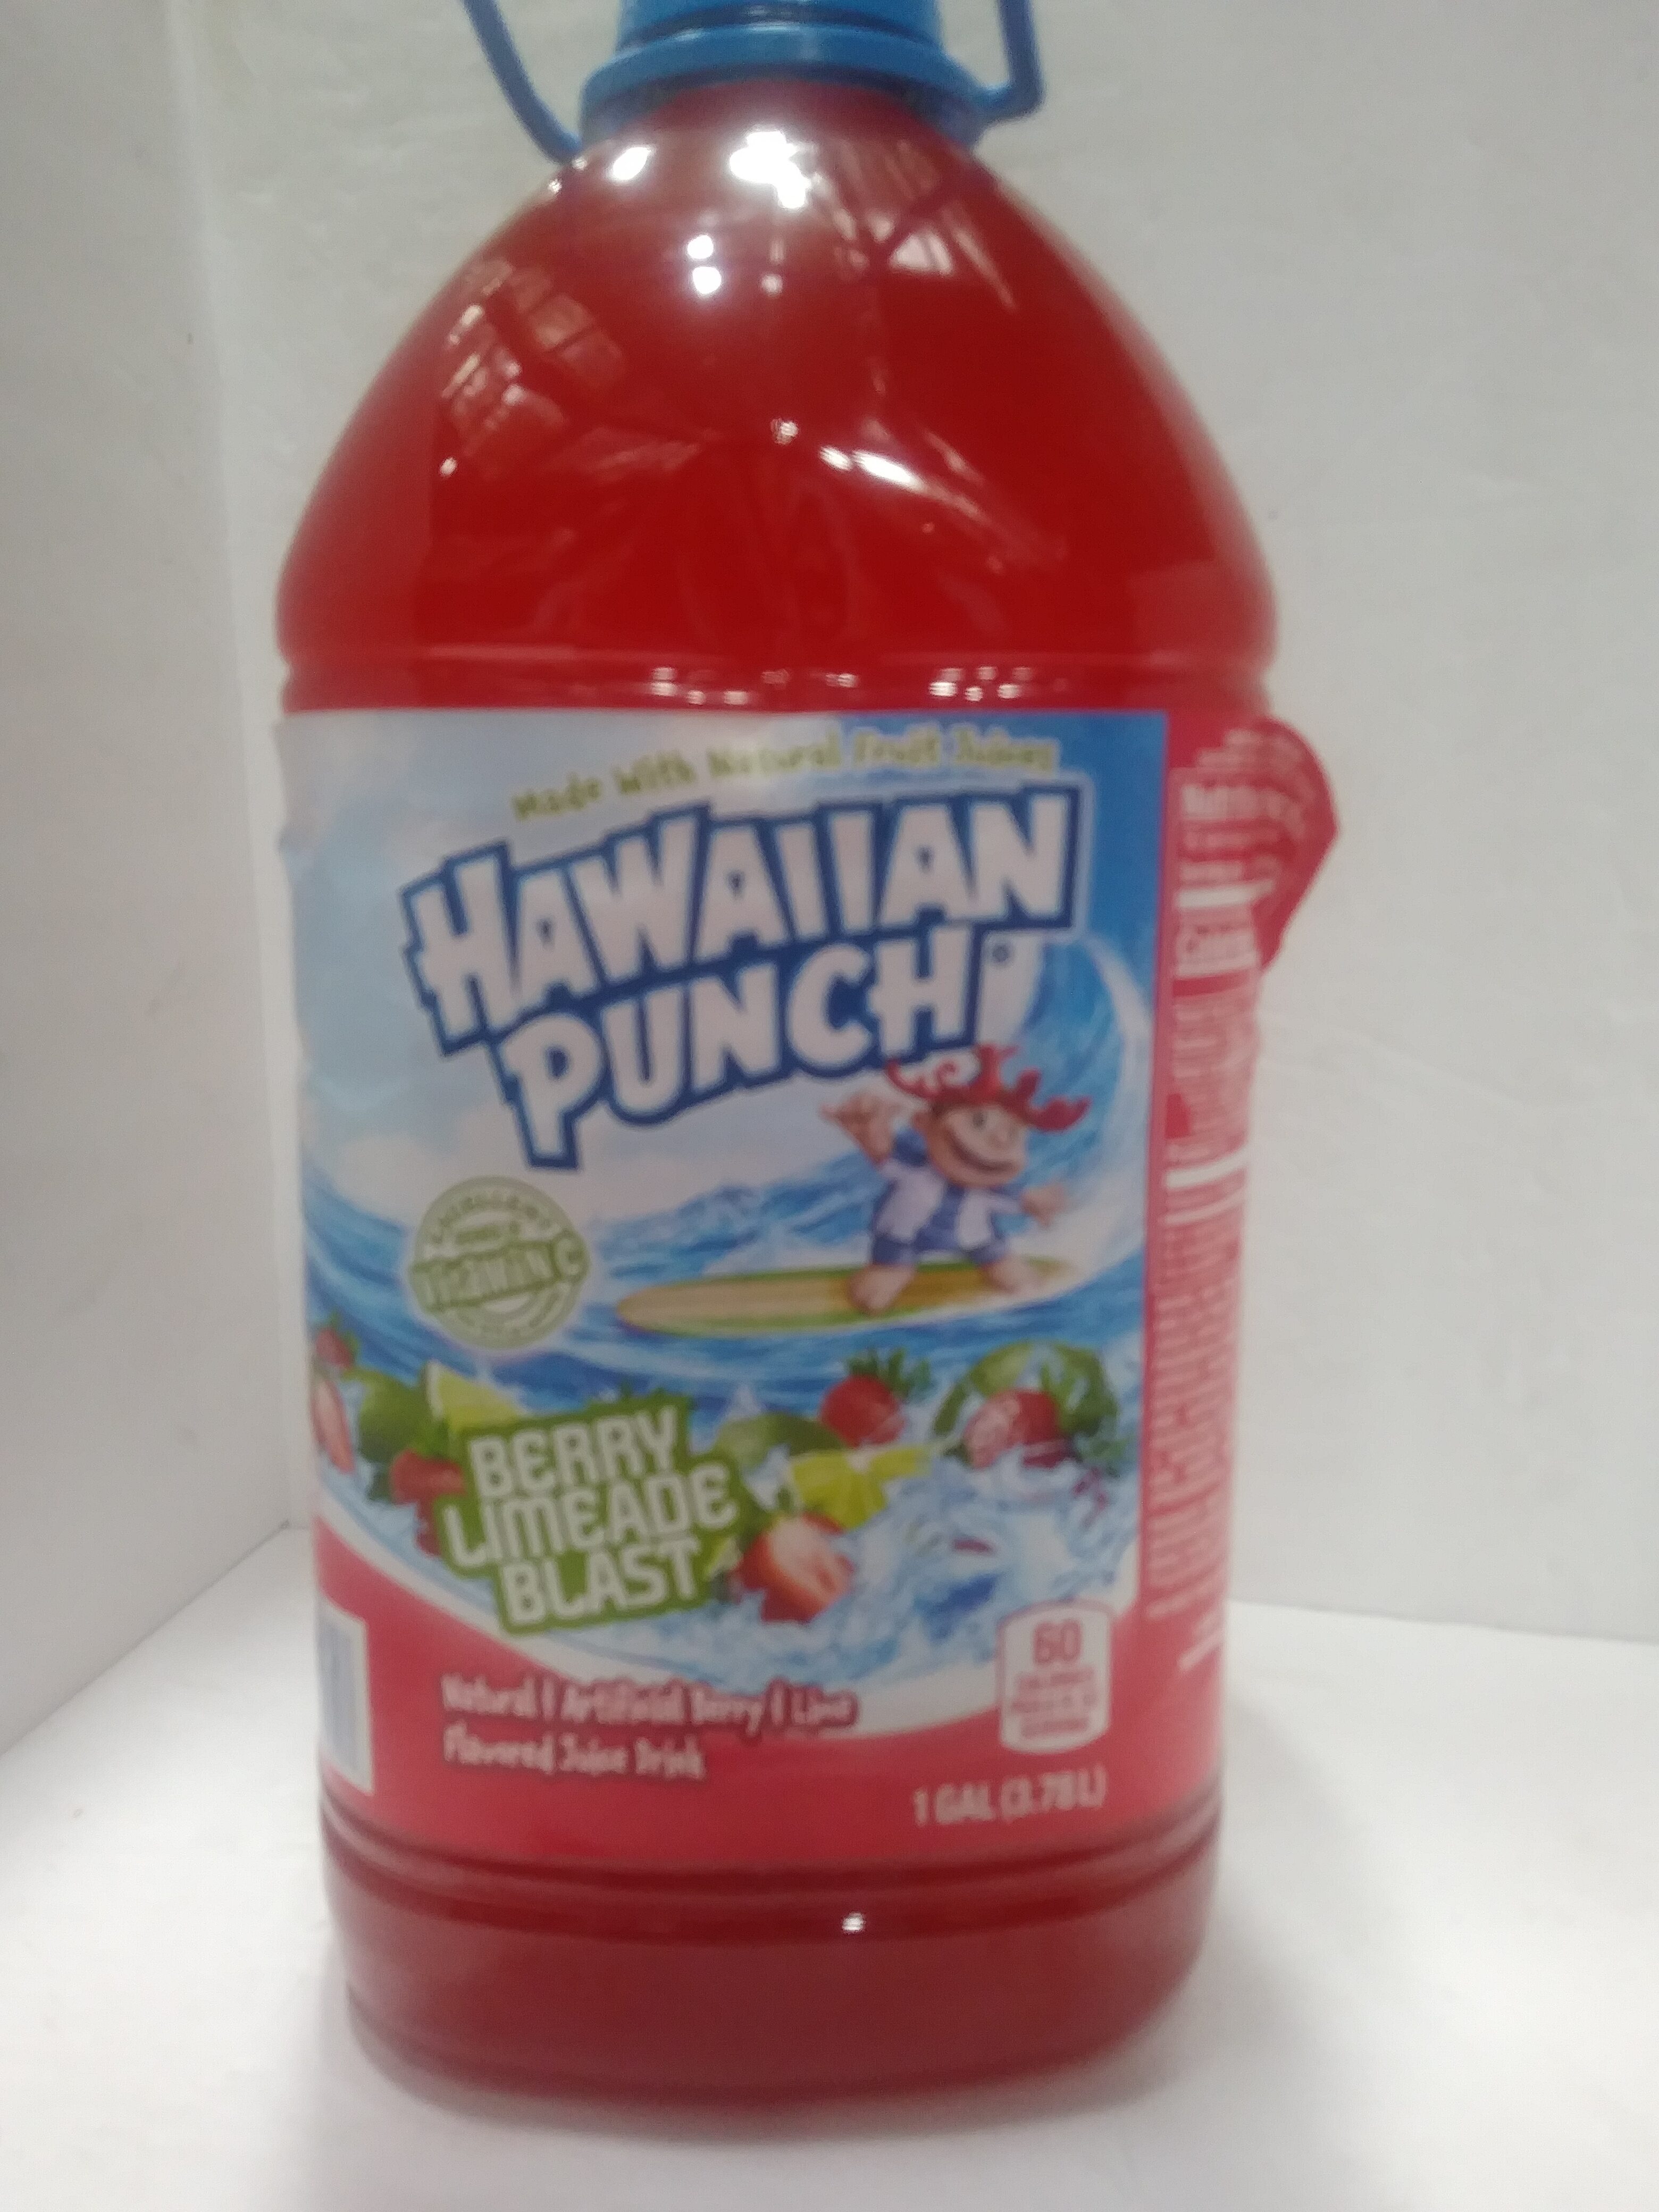 Berry Limeade Blast Hawaiin Punch - Product